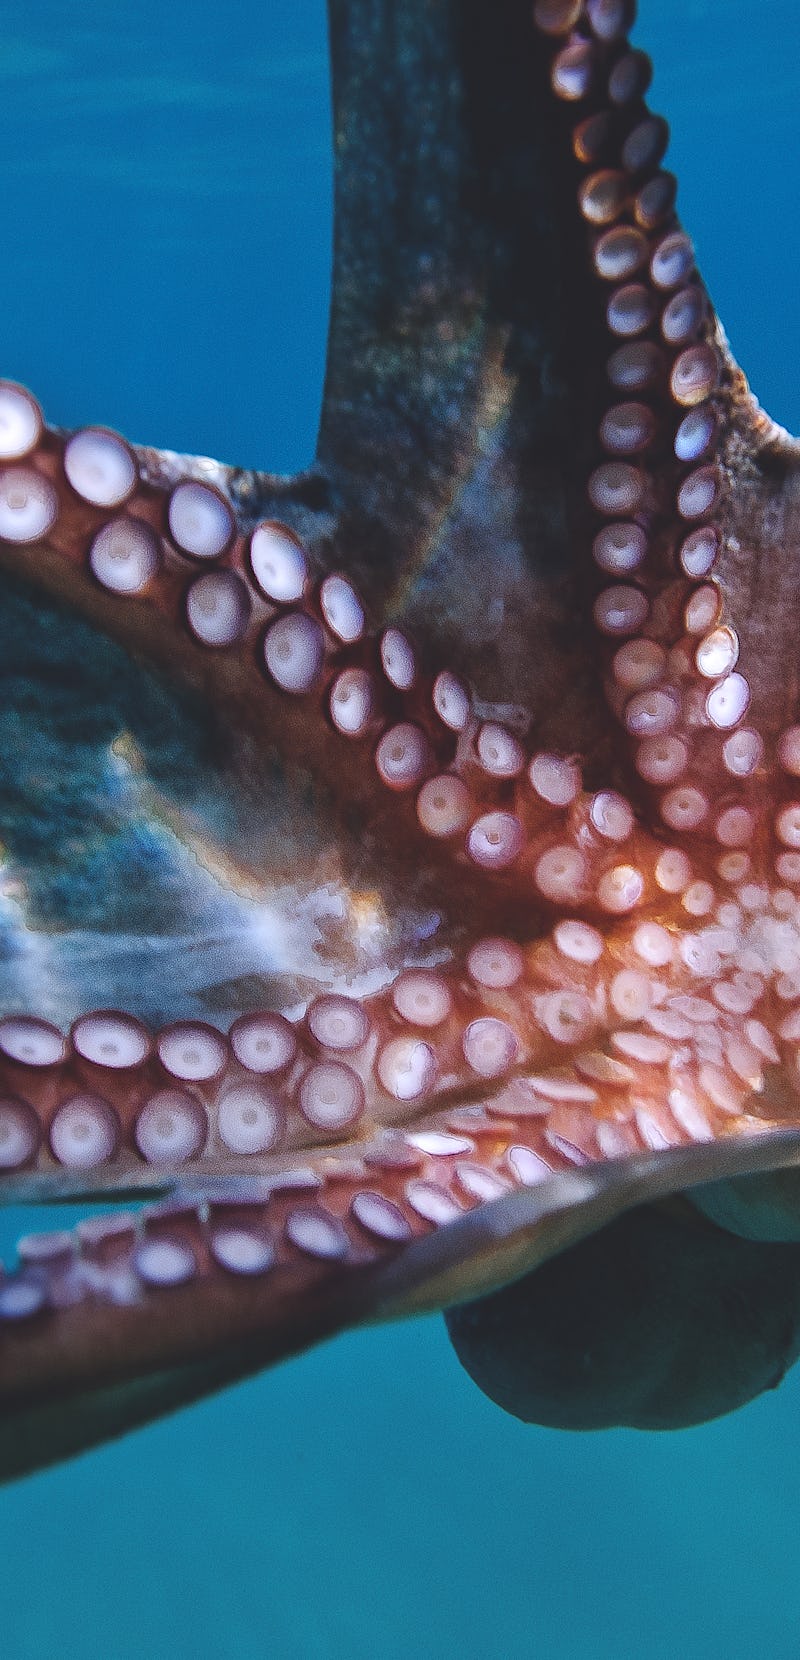 Octopus tentacles facing camera.